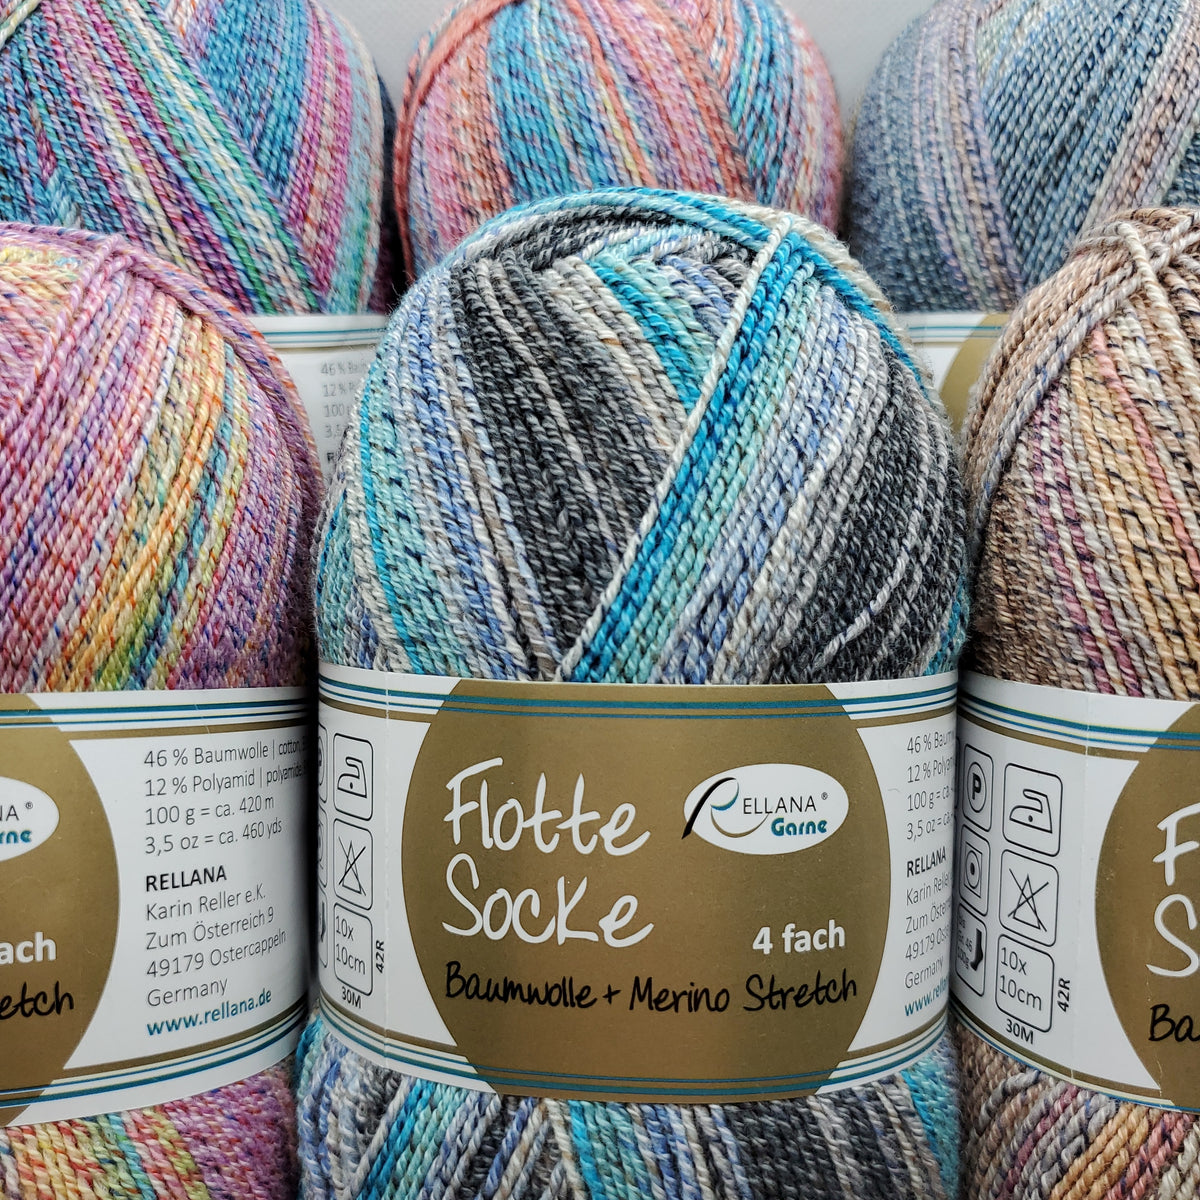 RELLANA Flotte Socke Baumwolle + Merino – Asammy's Yarn Shop